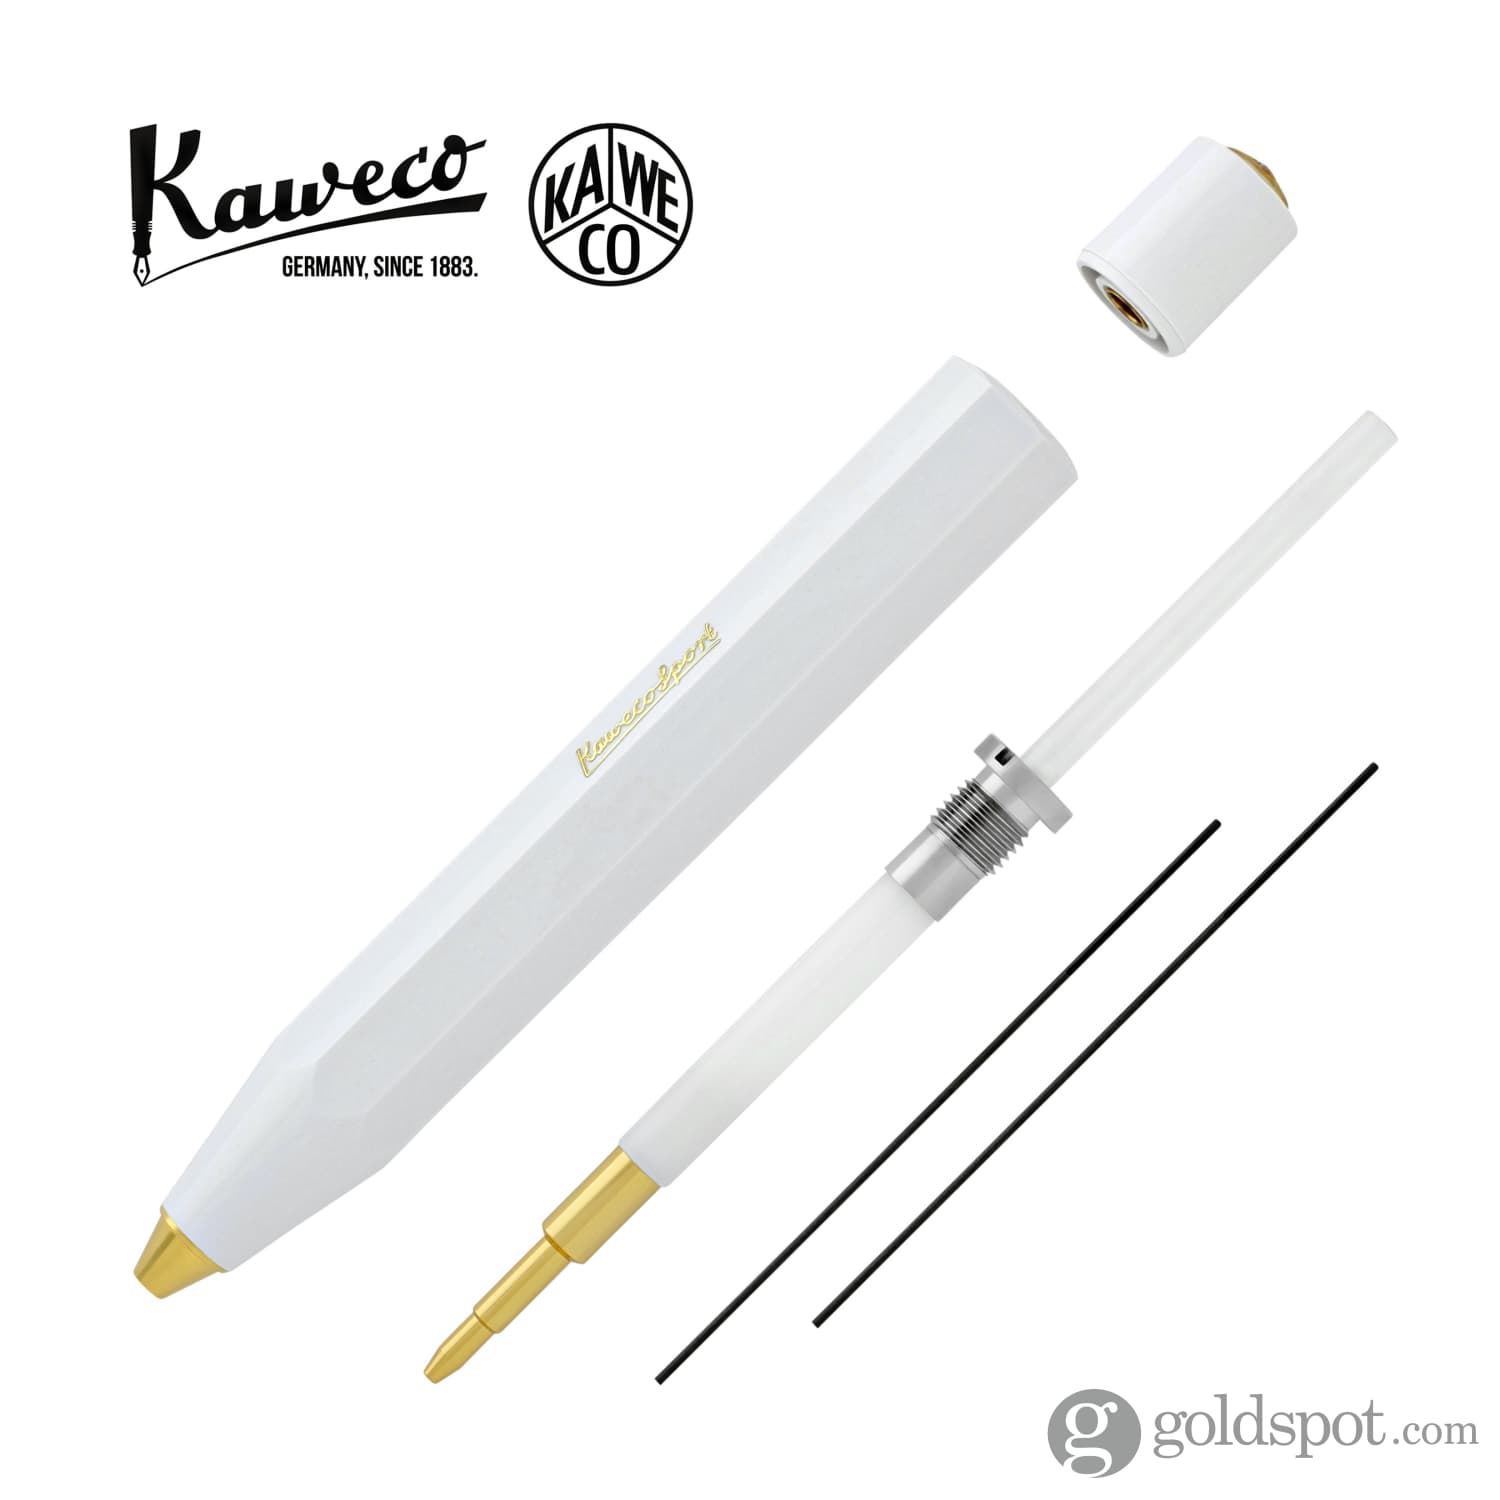 Kaweco Classic Sport Mechanical Pencil - 0.7 mm - White Body 10000052